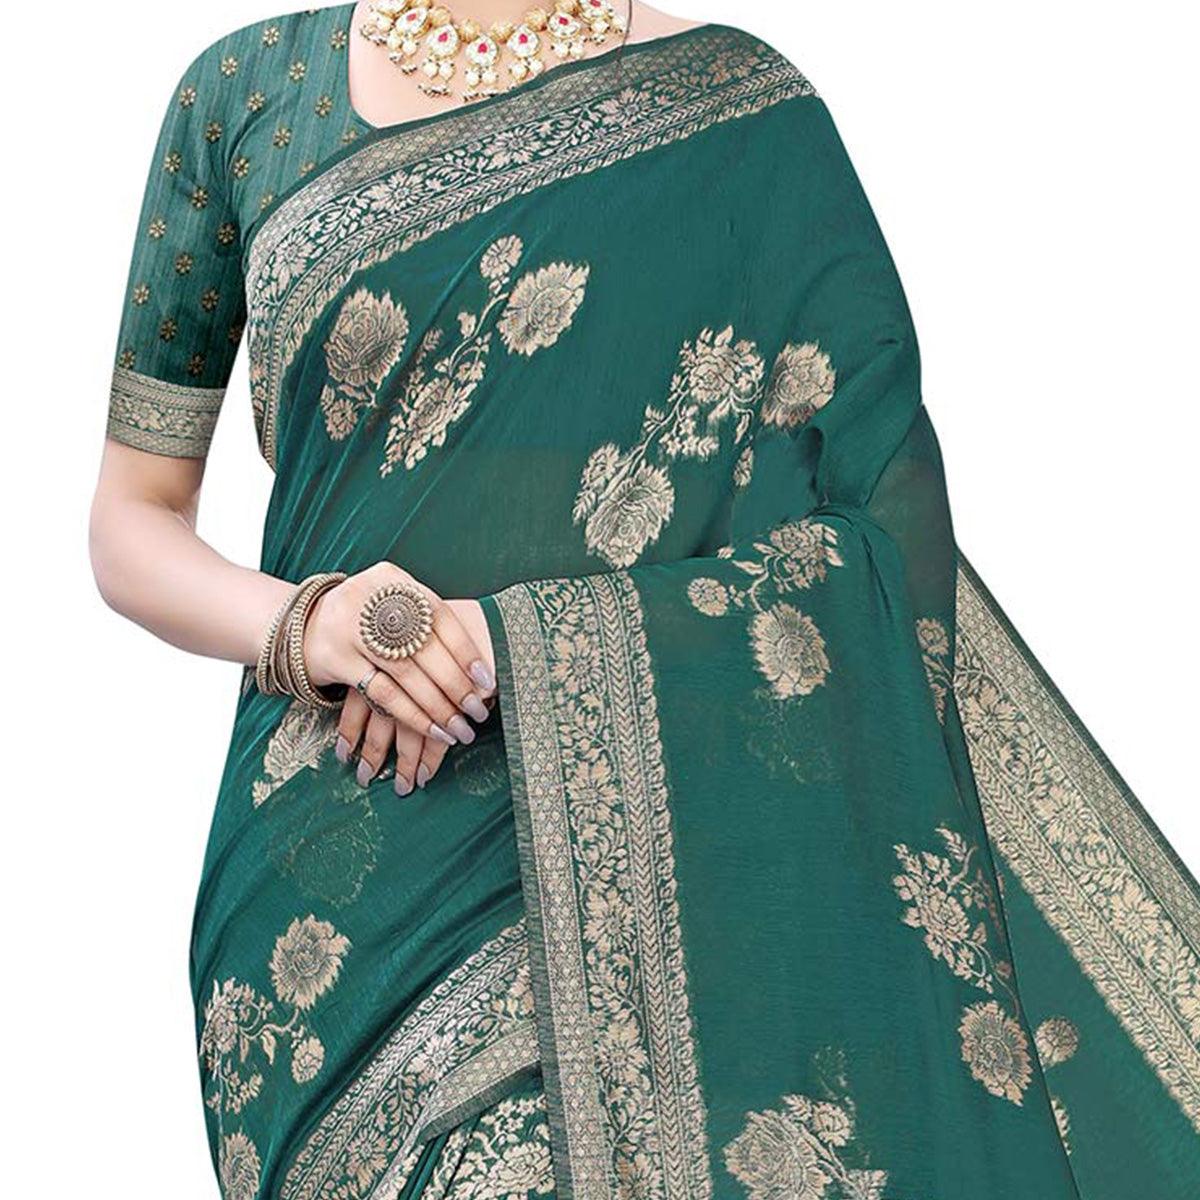 Innovative Green Colored Festive Wear Woven Banarasi Cotton Saree - Peachmode